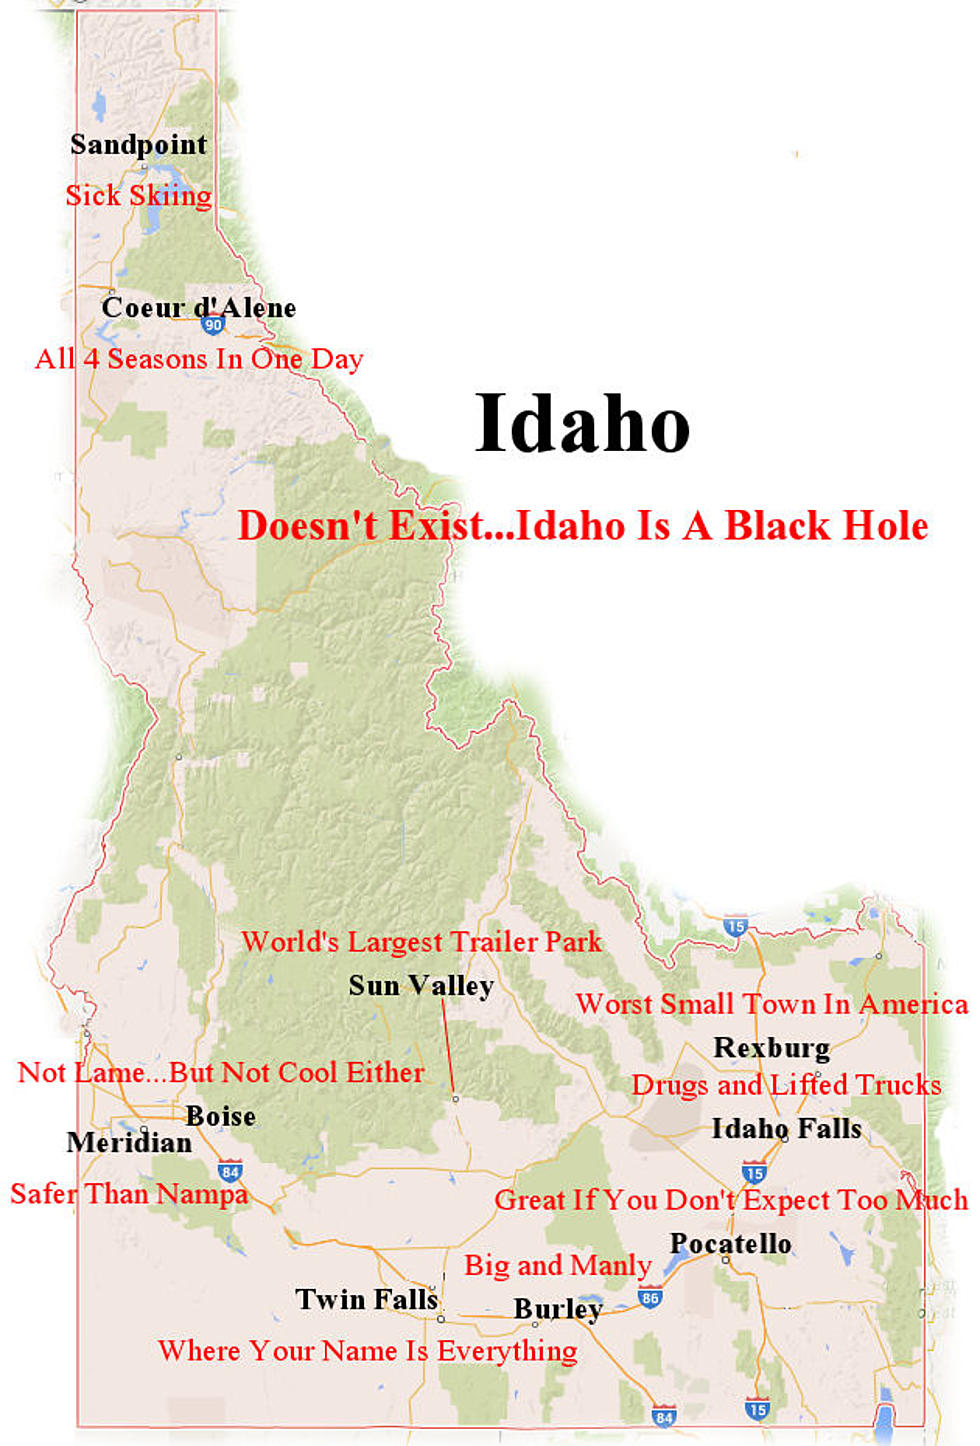 Idaho Town Names According To Urban Dictionary